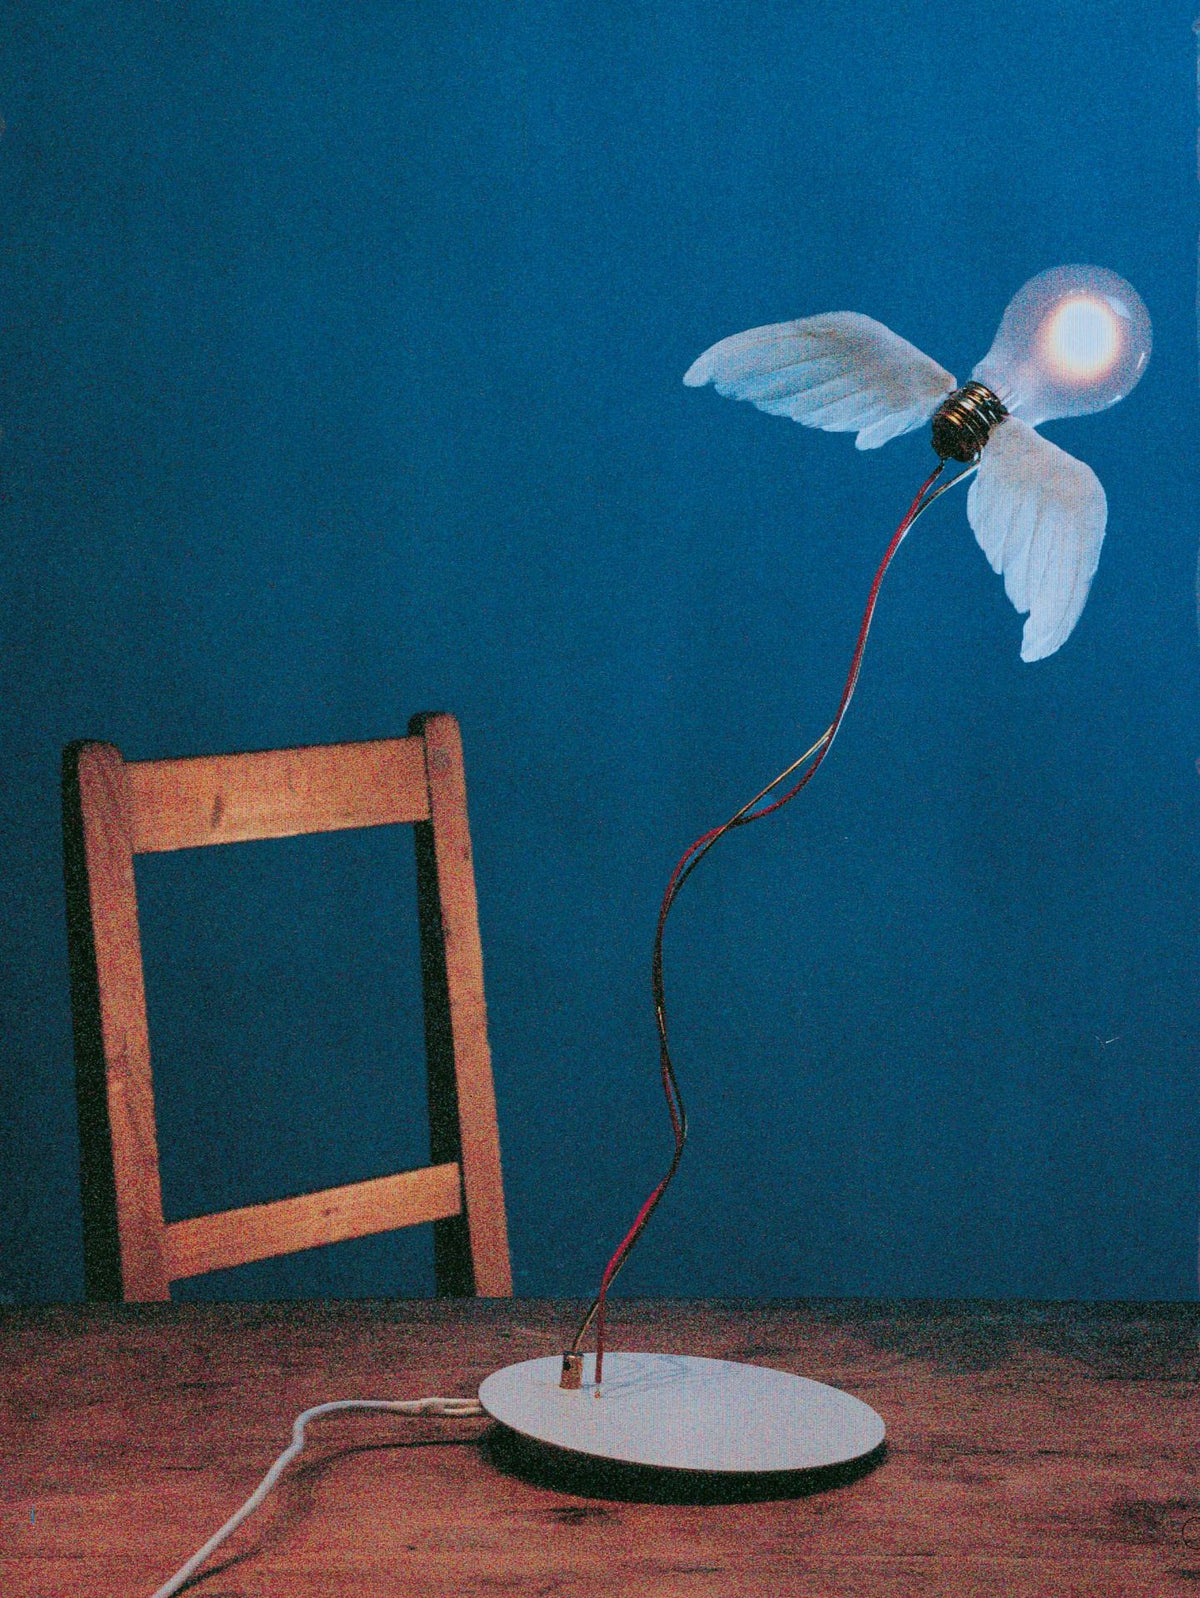 Lampe de Bureau Lucellino par Ingo Maurer